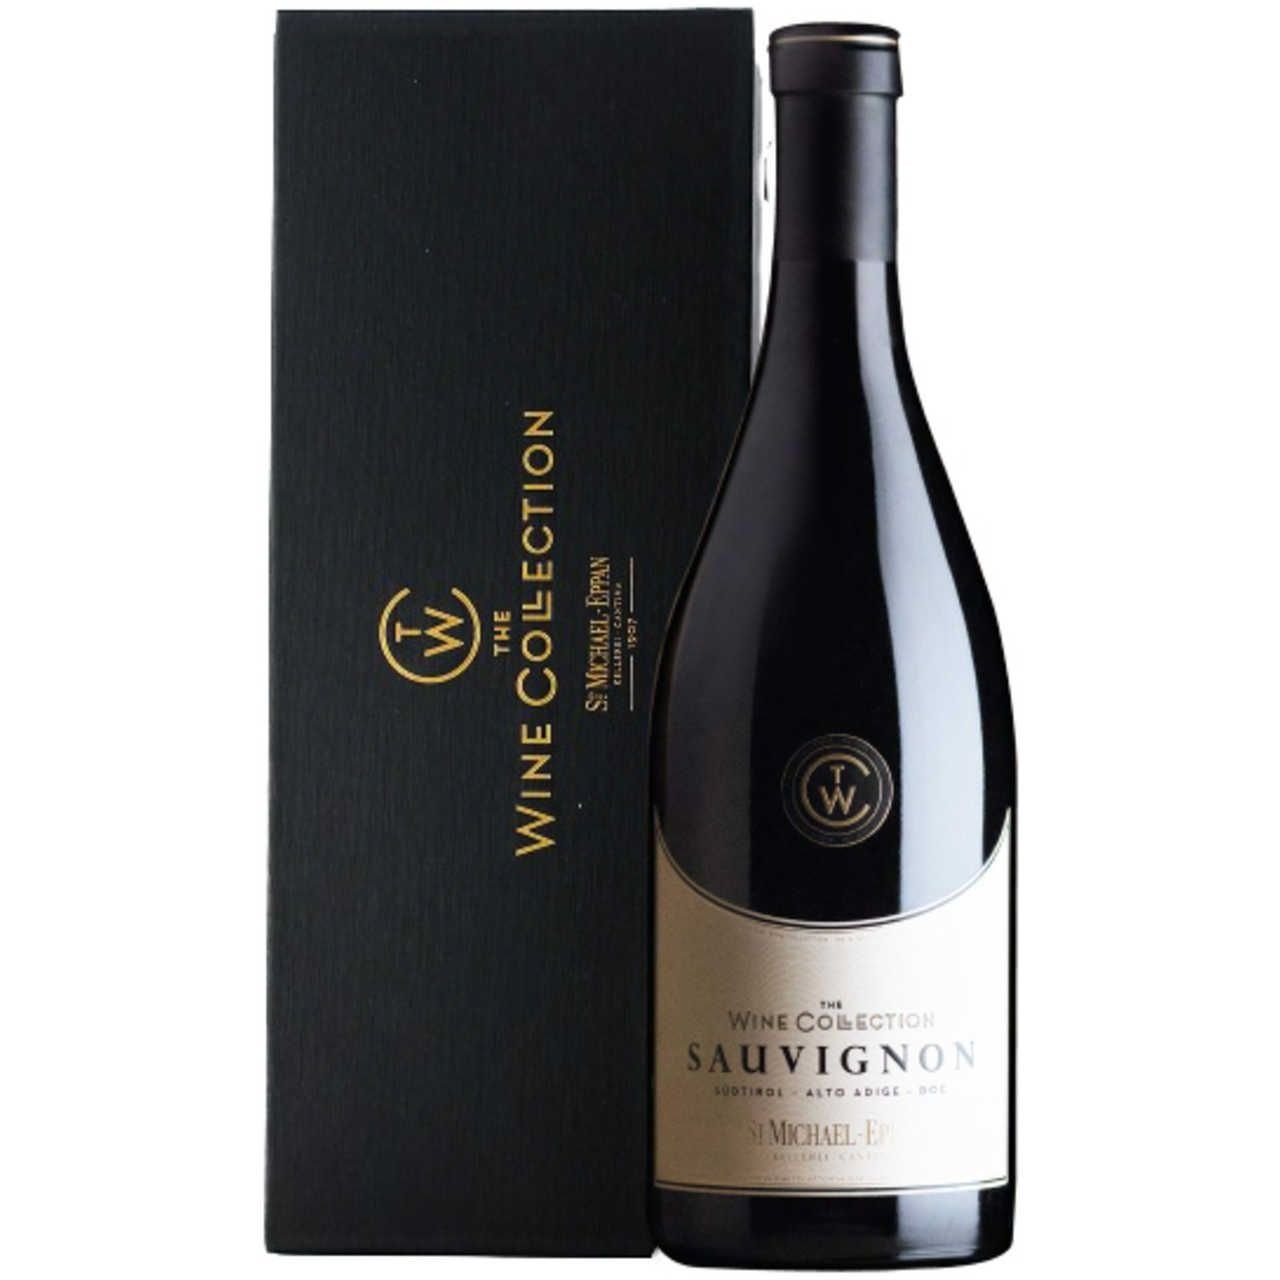 Вино St.Michael-Eppan Appiano Sauvignon The Wine Collection Alto Adige DOC 2017 белое сухое 0.75 л - фото 1